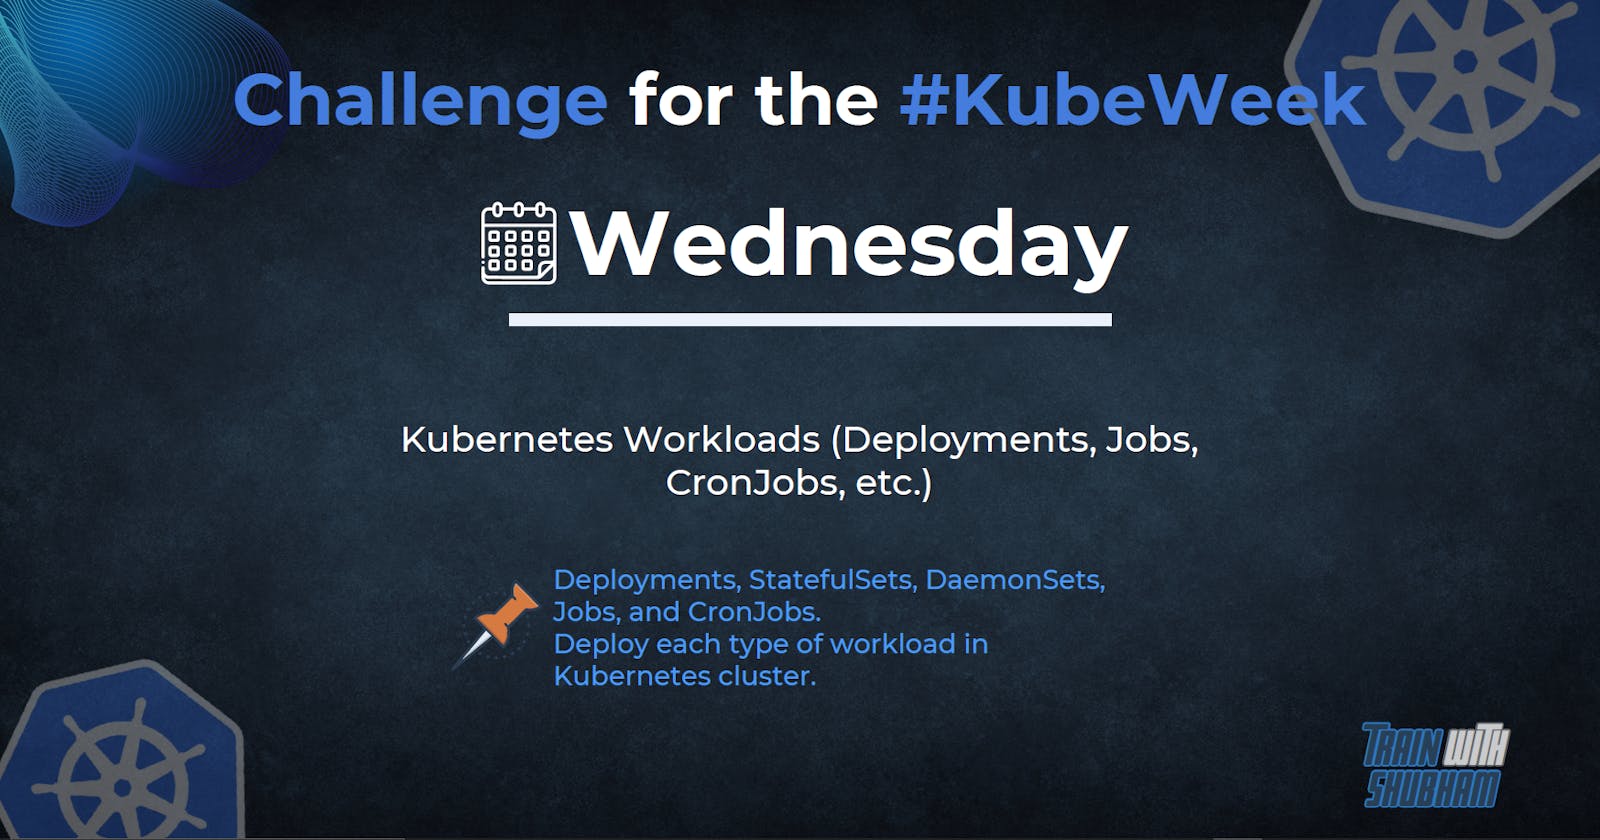 Day 3 - Kubernetes Workloads (Deployments, StatefulSets, DaemonSets, Jobs,
CronJobs)